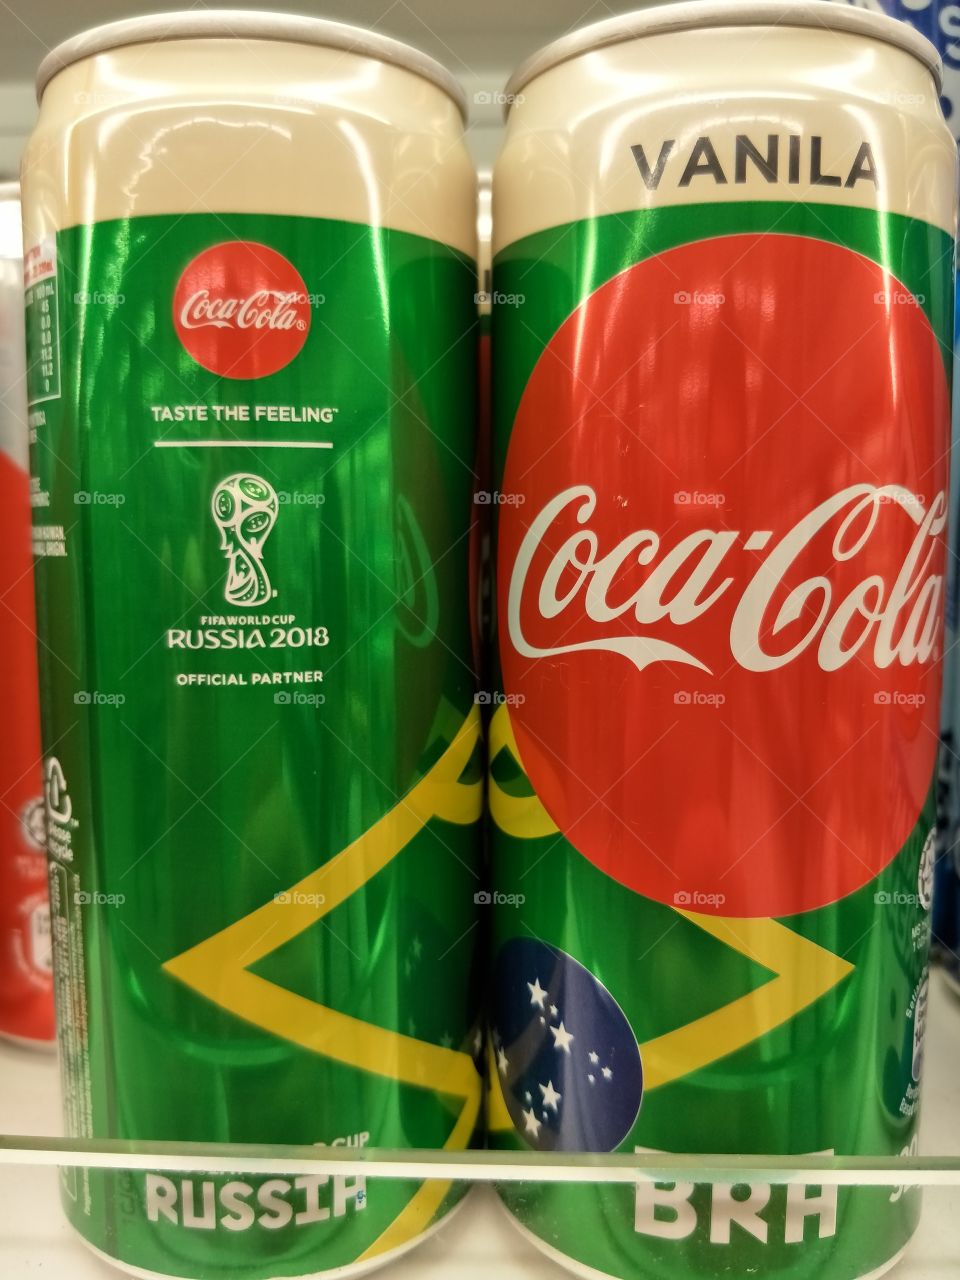 russia 2018. vanila coke